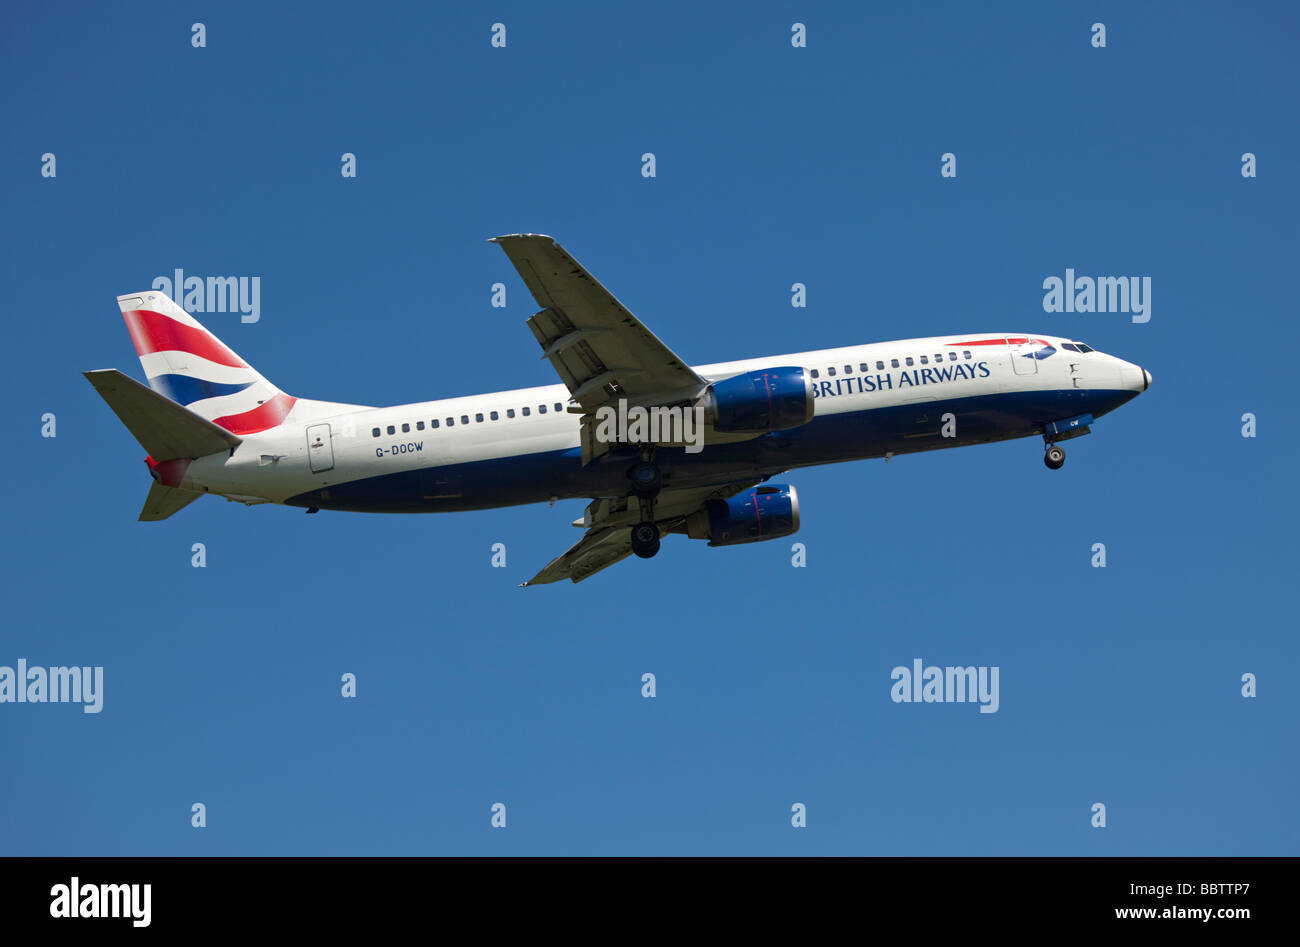 British Airways Boeing 737 aircraft landing at Gatwick Airport, England Stock Photo